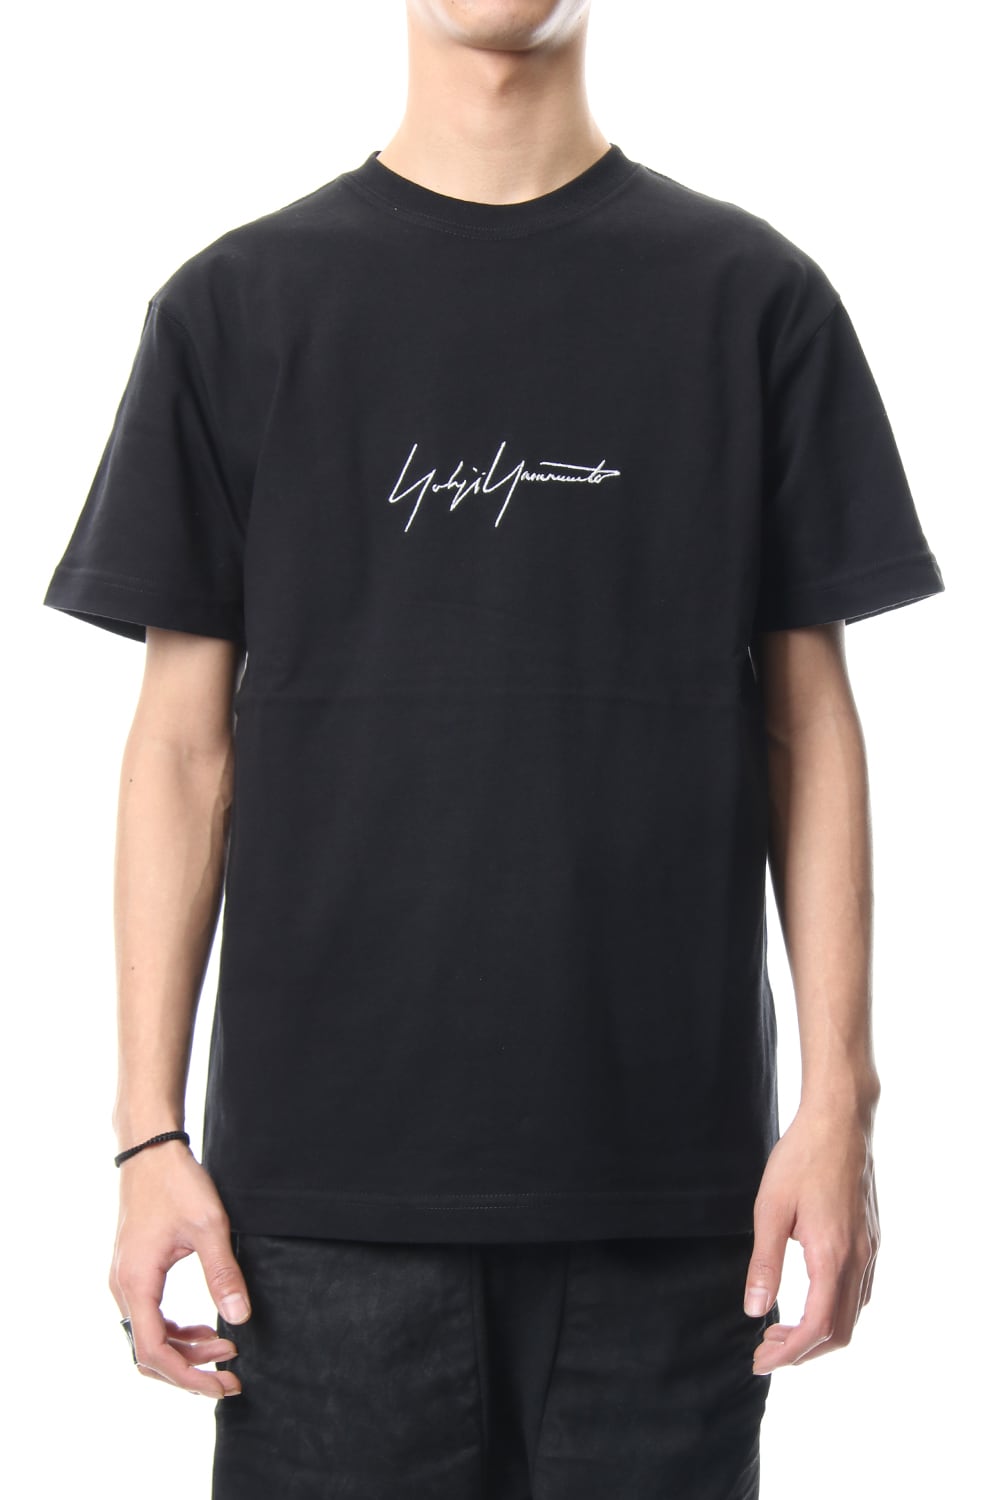 Yohji Yamamoto Pour Homme - New Era T-shirt - Online Store 